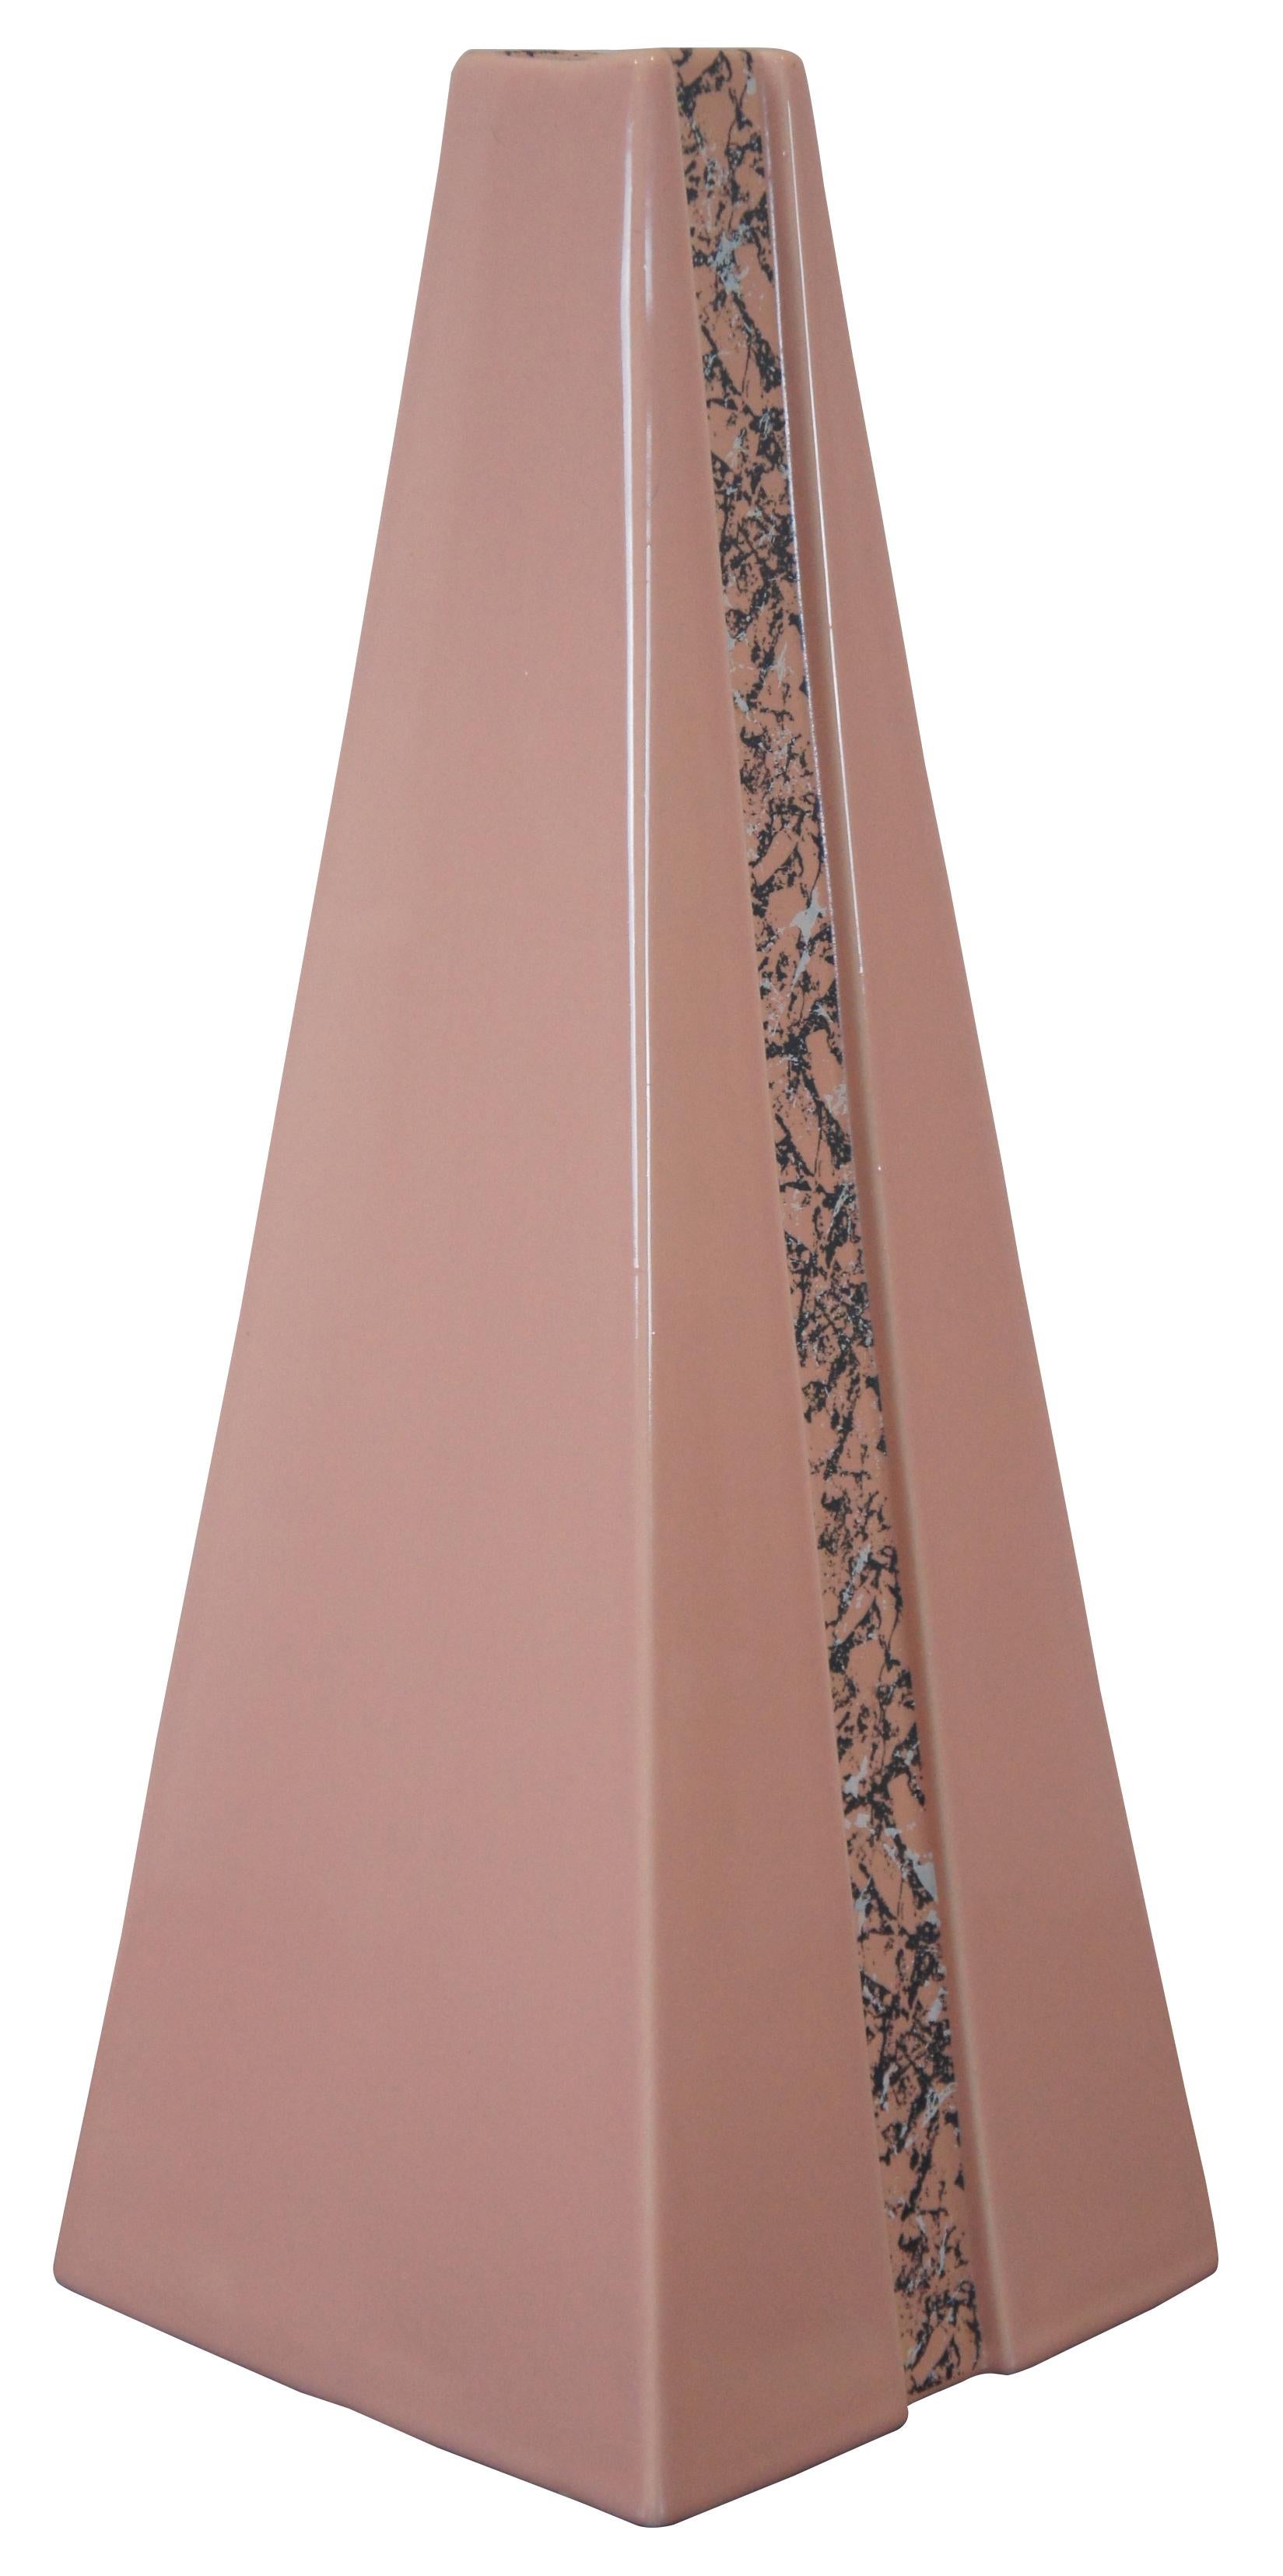 Haegar Keramik Art Deco Stil Rosa Keramik Pyramide Kaminsims Vase Urne Marmoriert (Art déco) im Angebot